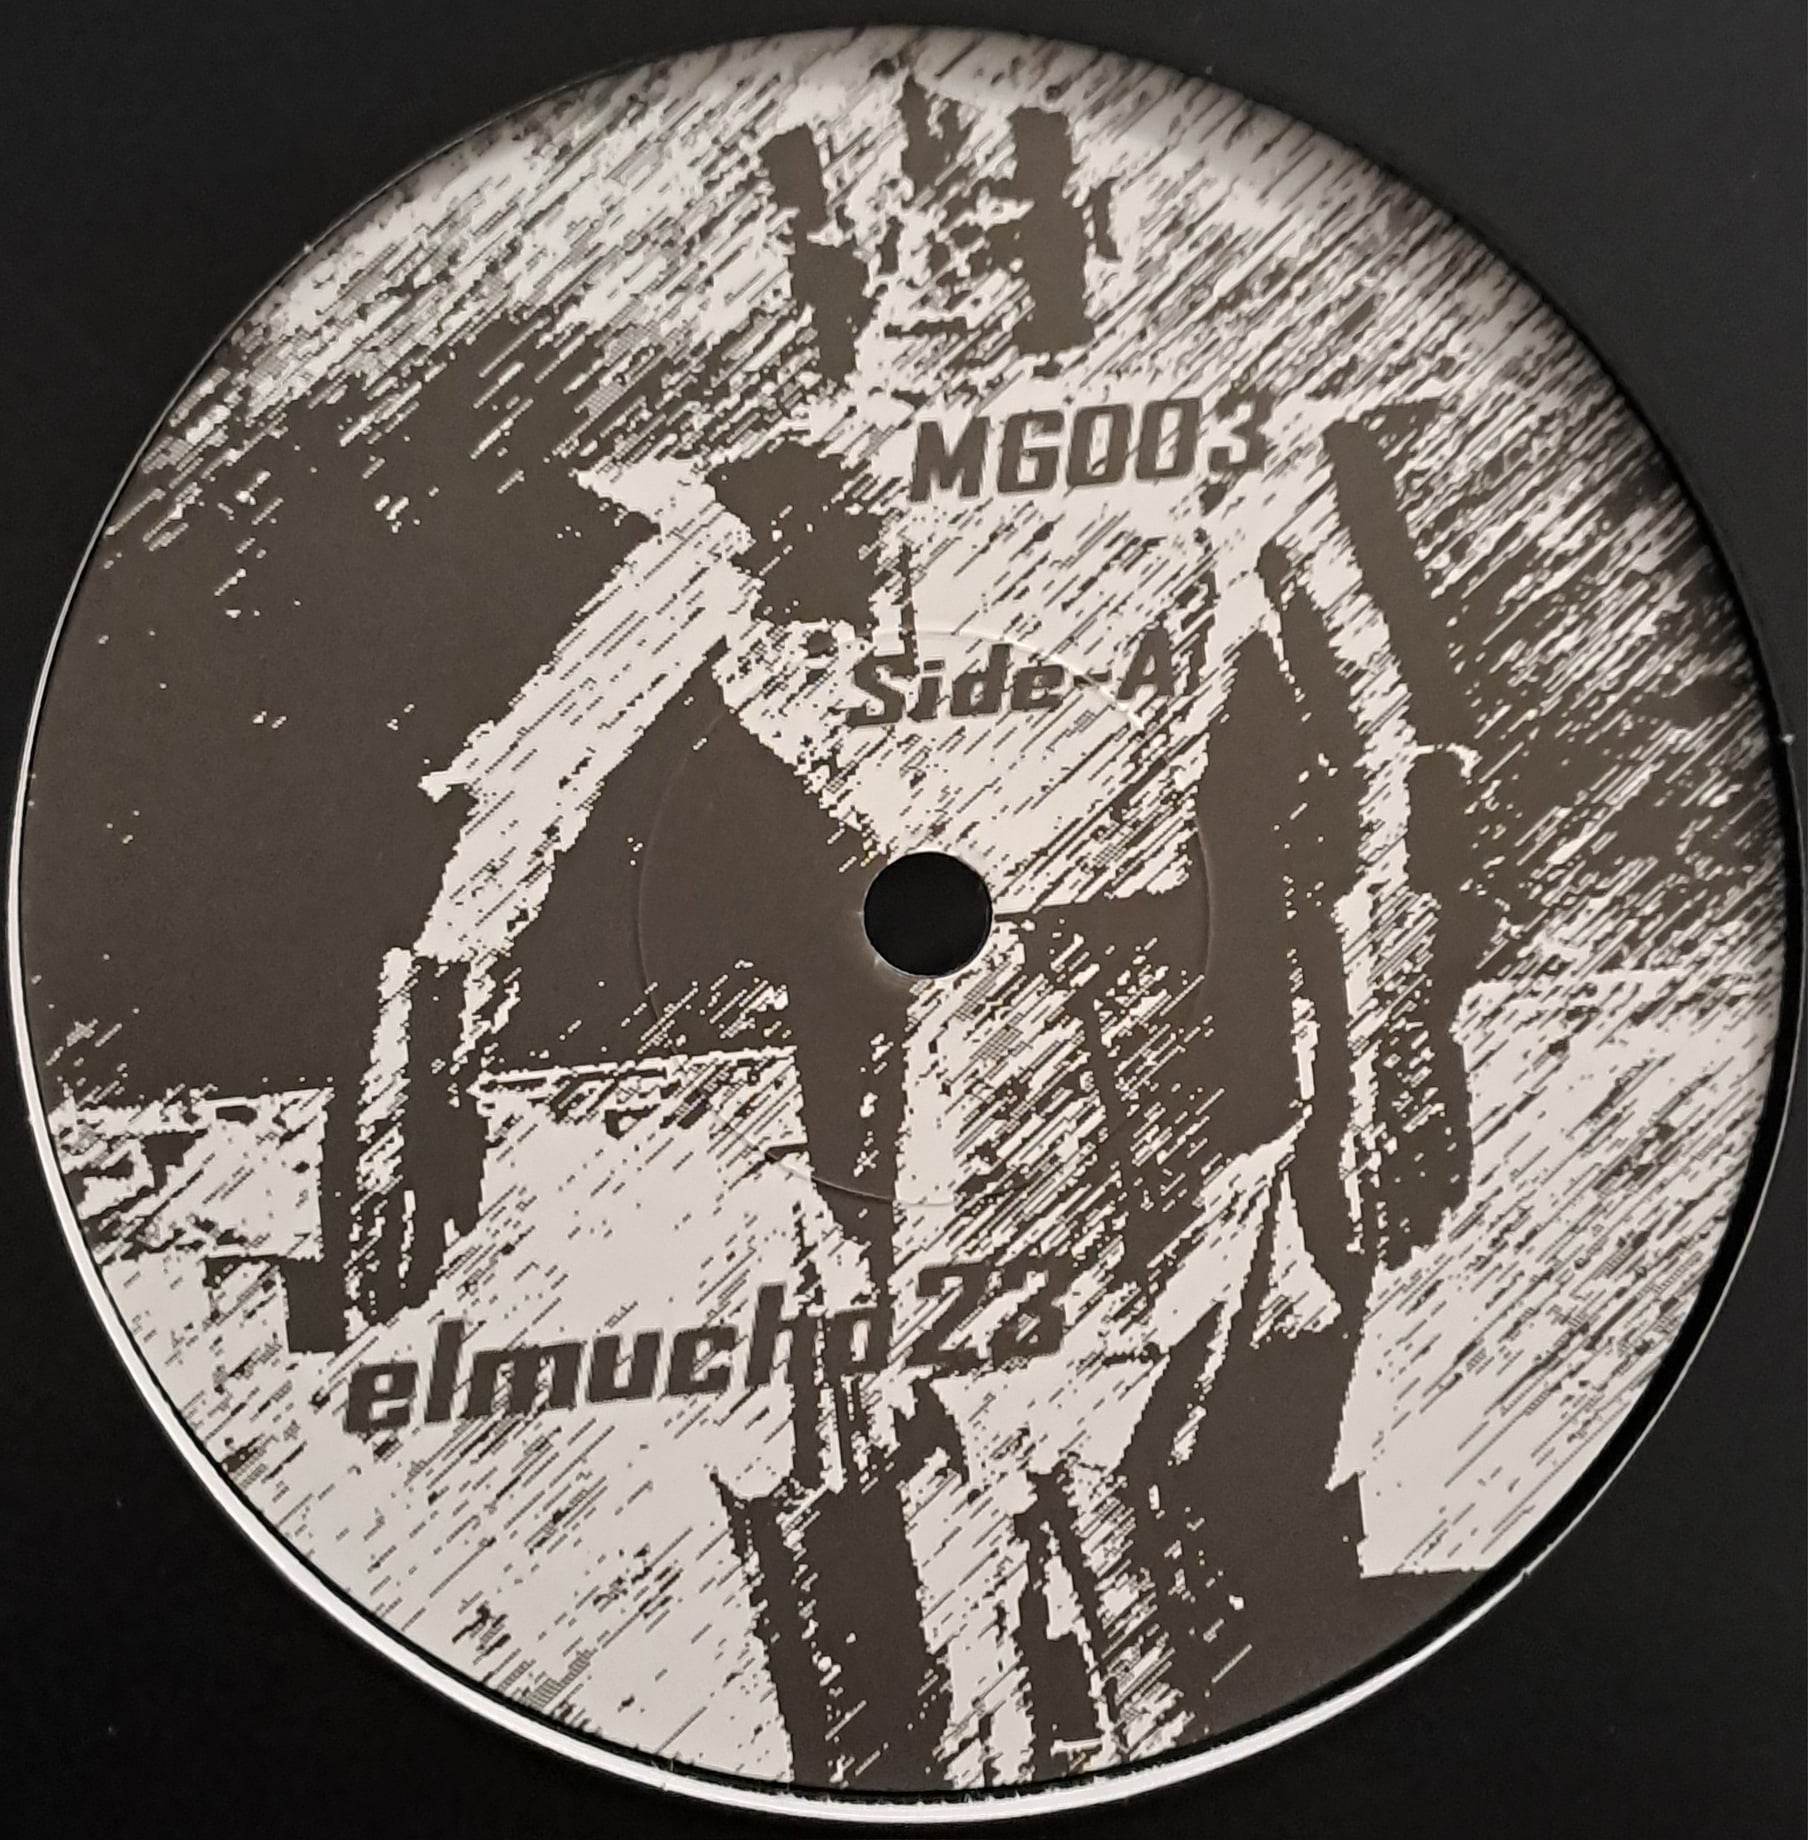 MG Recs 003 (dernières copies en stock) - vinyle freetekno